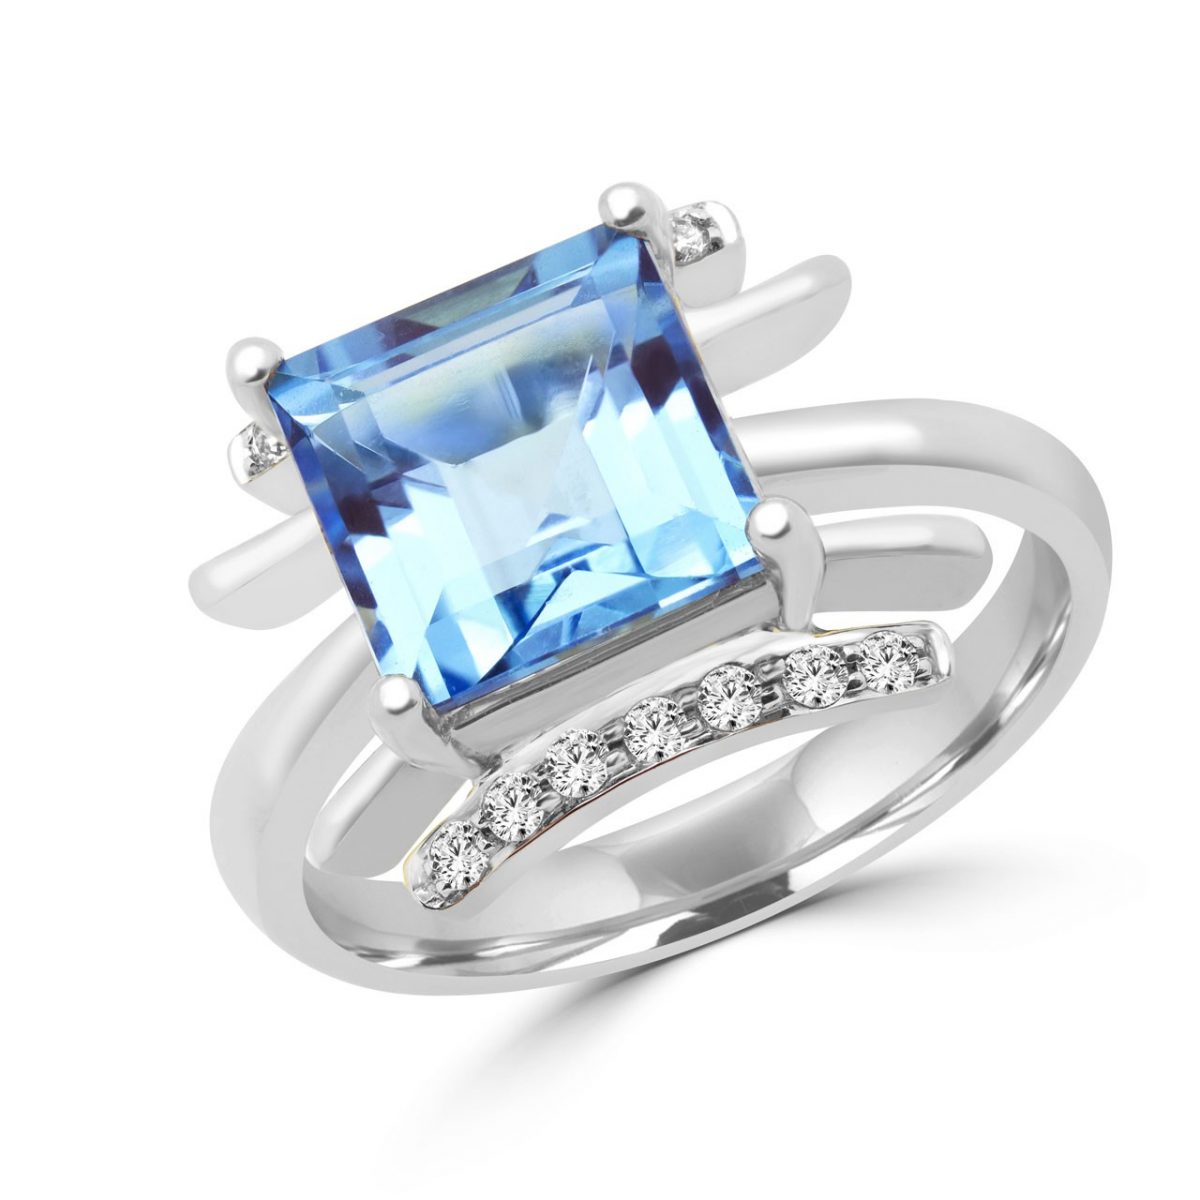 Emerald cut blue topaz & diamond cocktail ring in 10k white gold